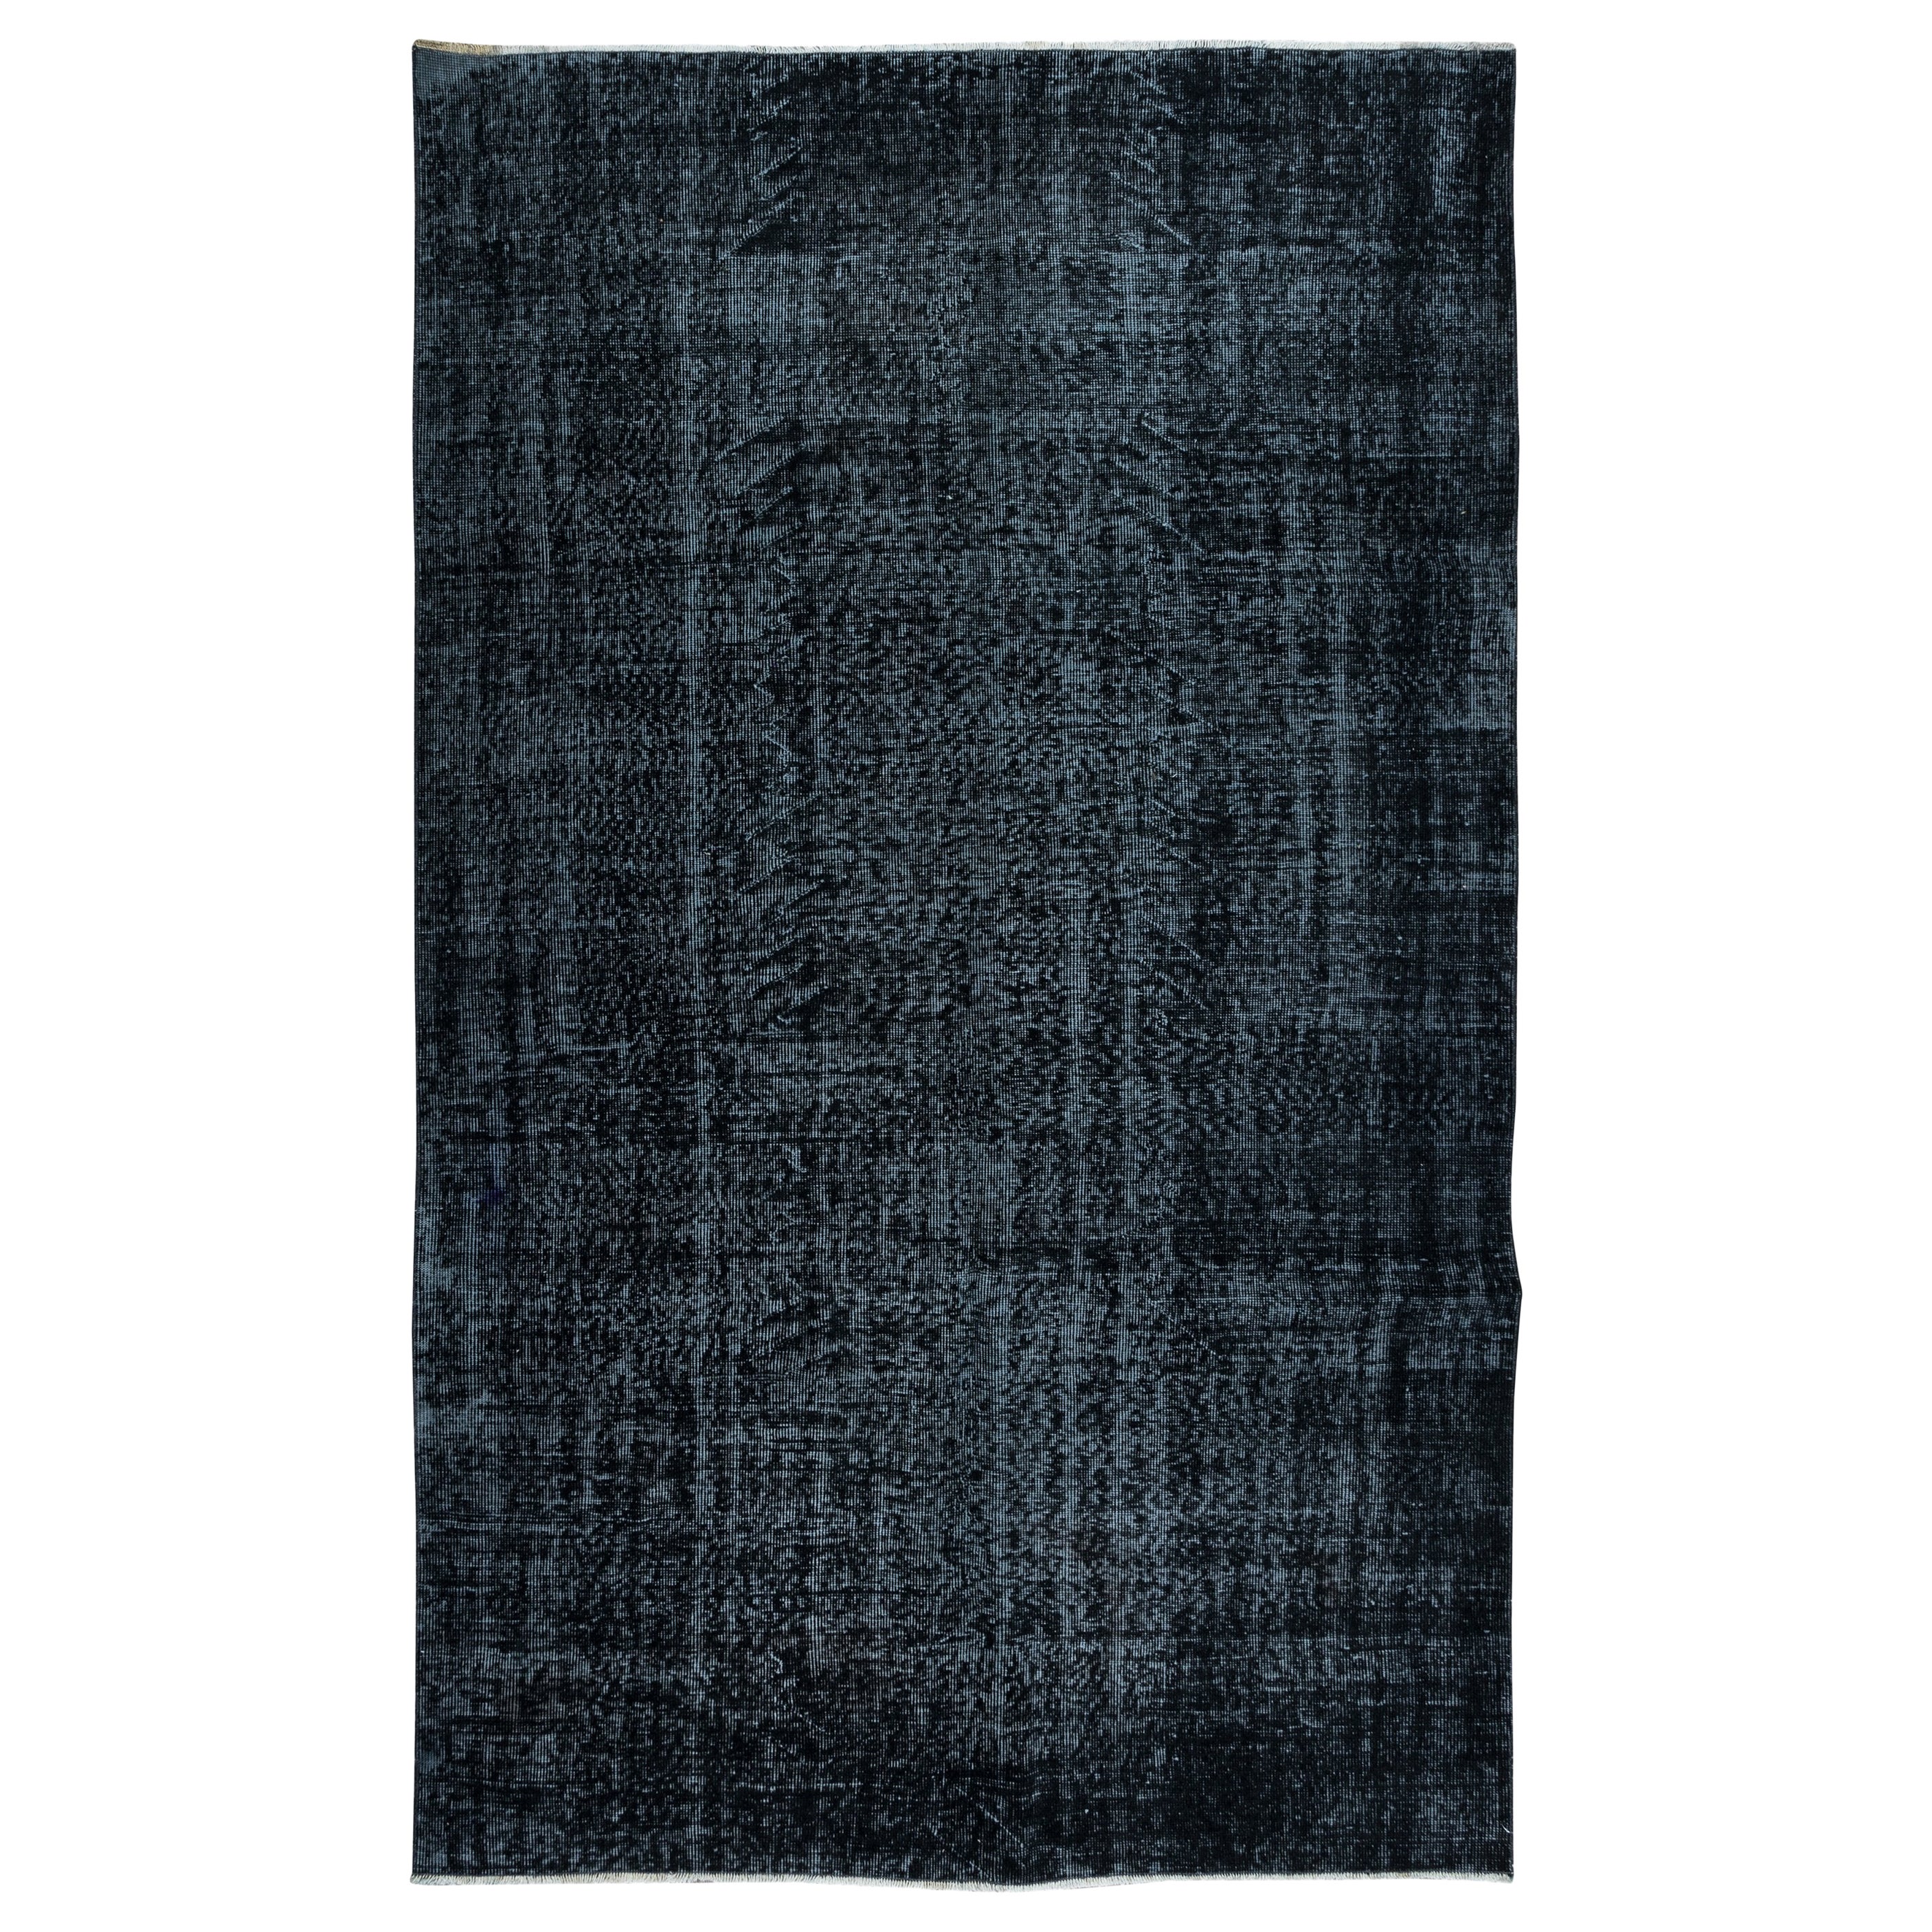 5.3x8.7 Ft Handmade Turkish Modern Wool Area Rug in Black & Bluish Black